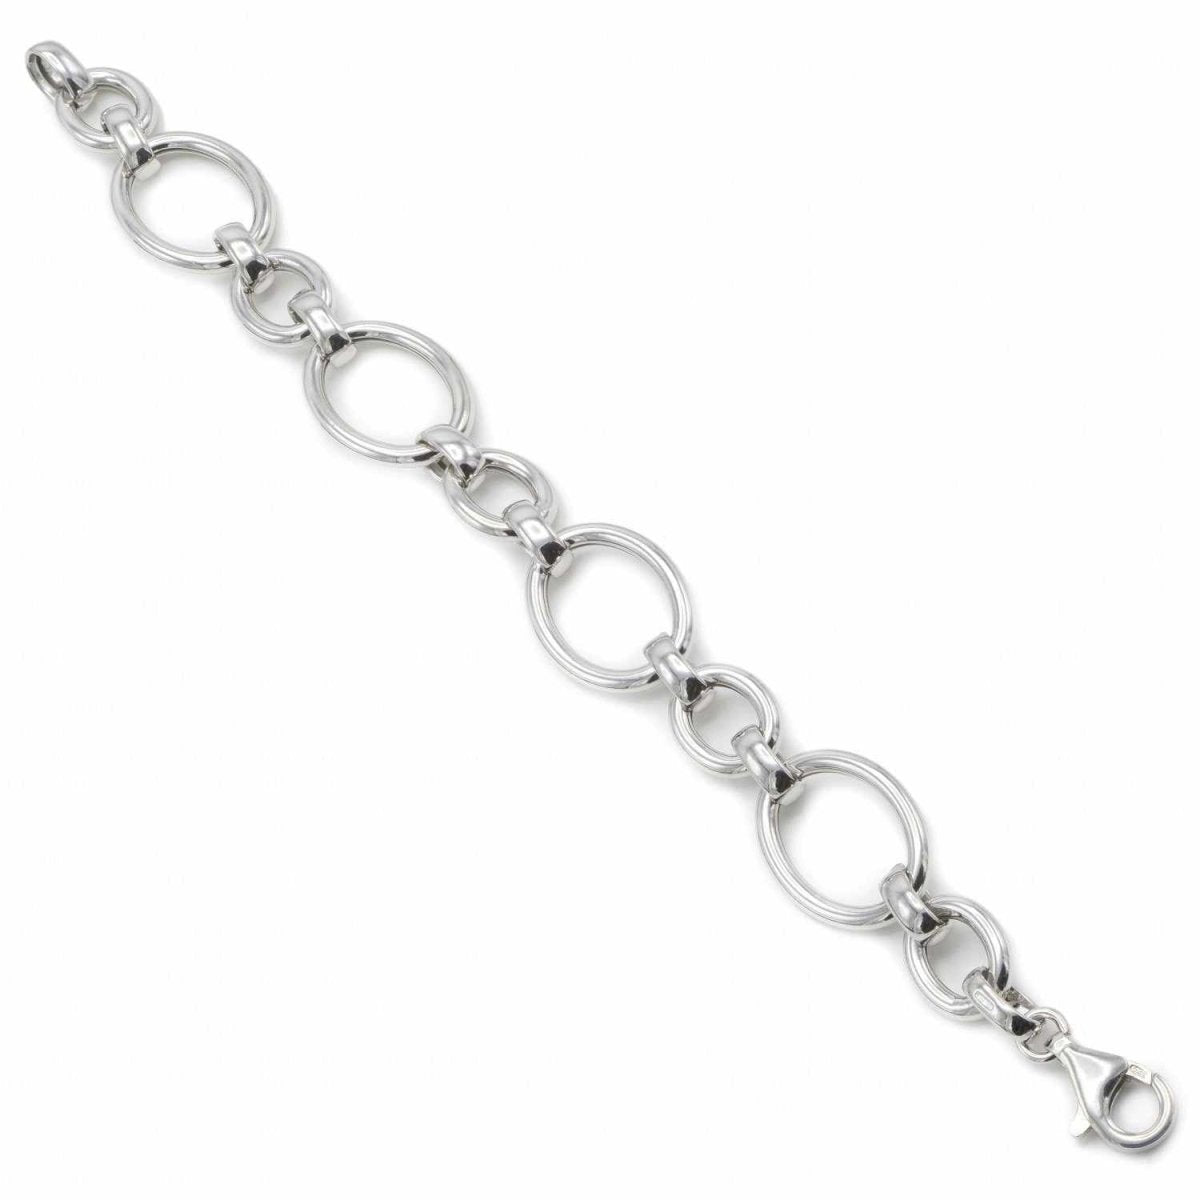 Bracelet - Round and fine smooth silver links bracelets